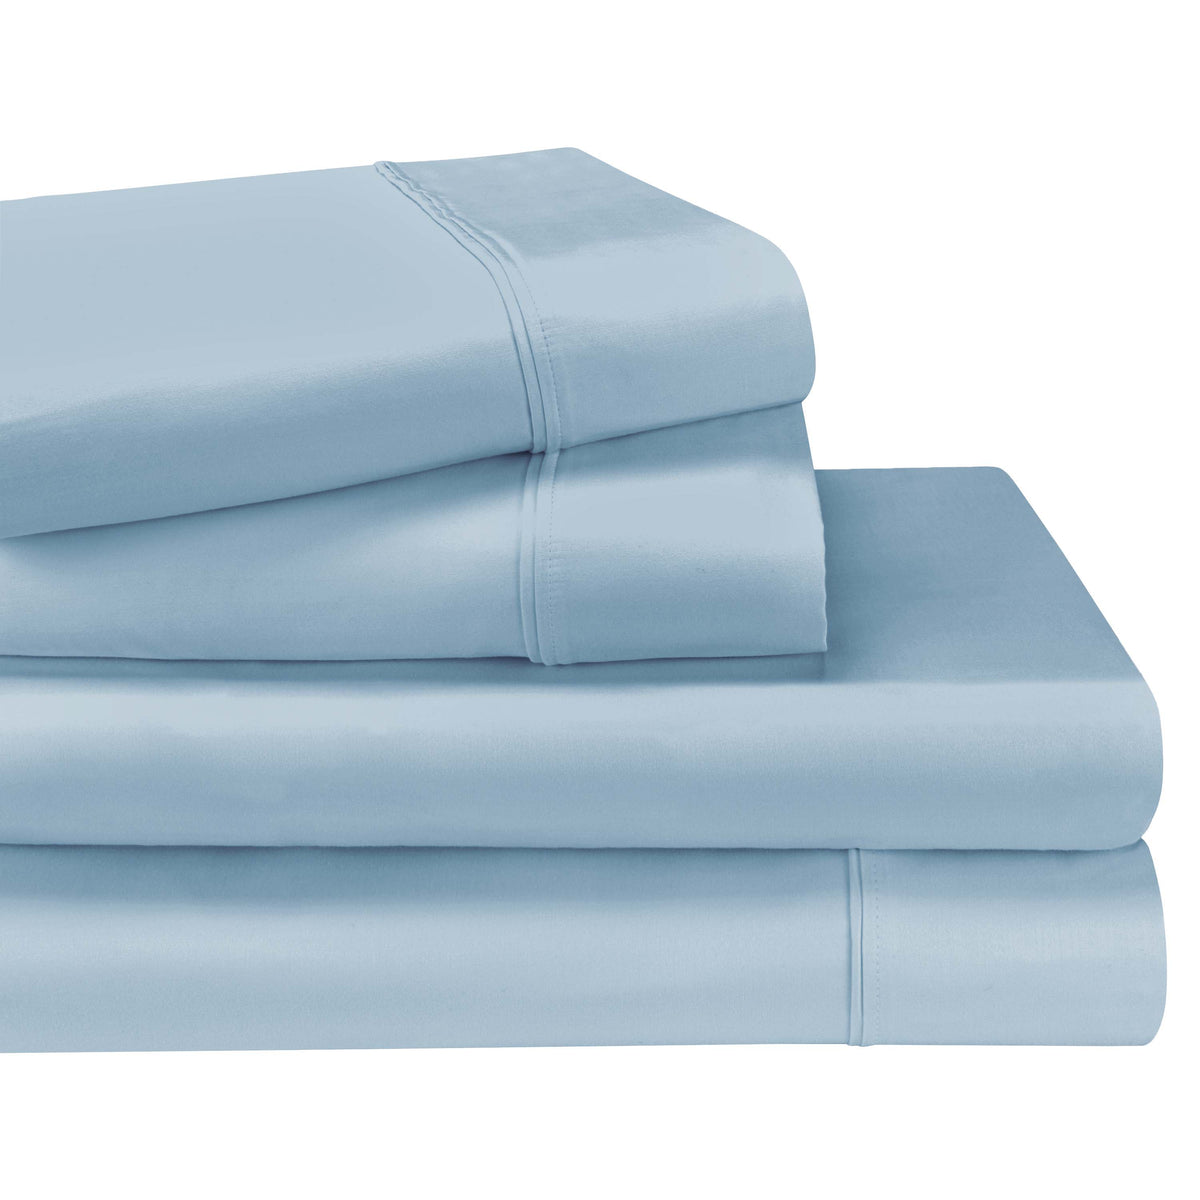 Egyptian Cotton 1200 Thread Count Eco-Friendly Solid Sheet Set - LightBlue